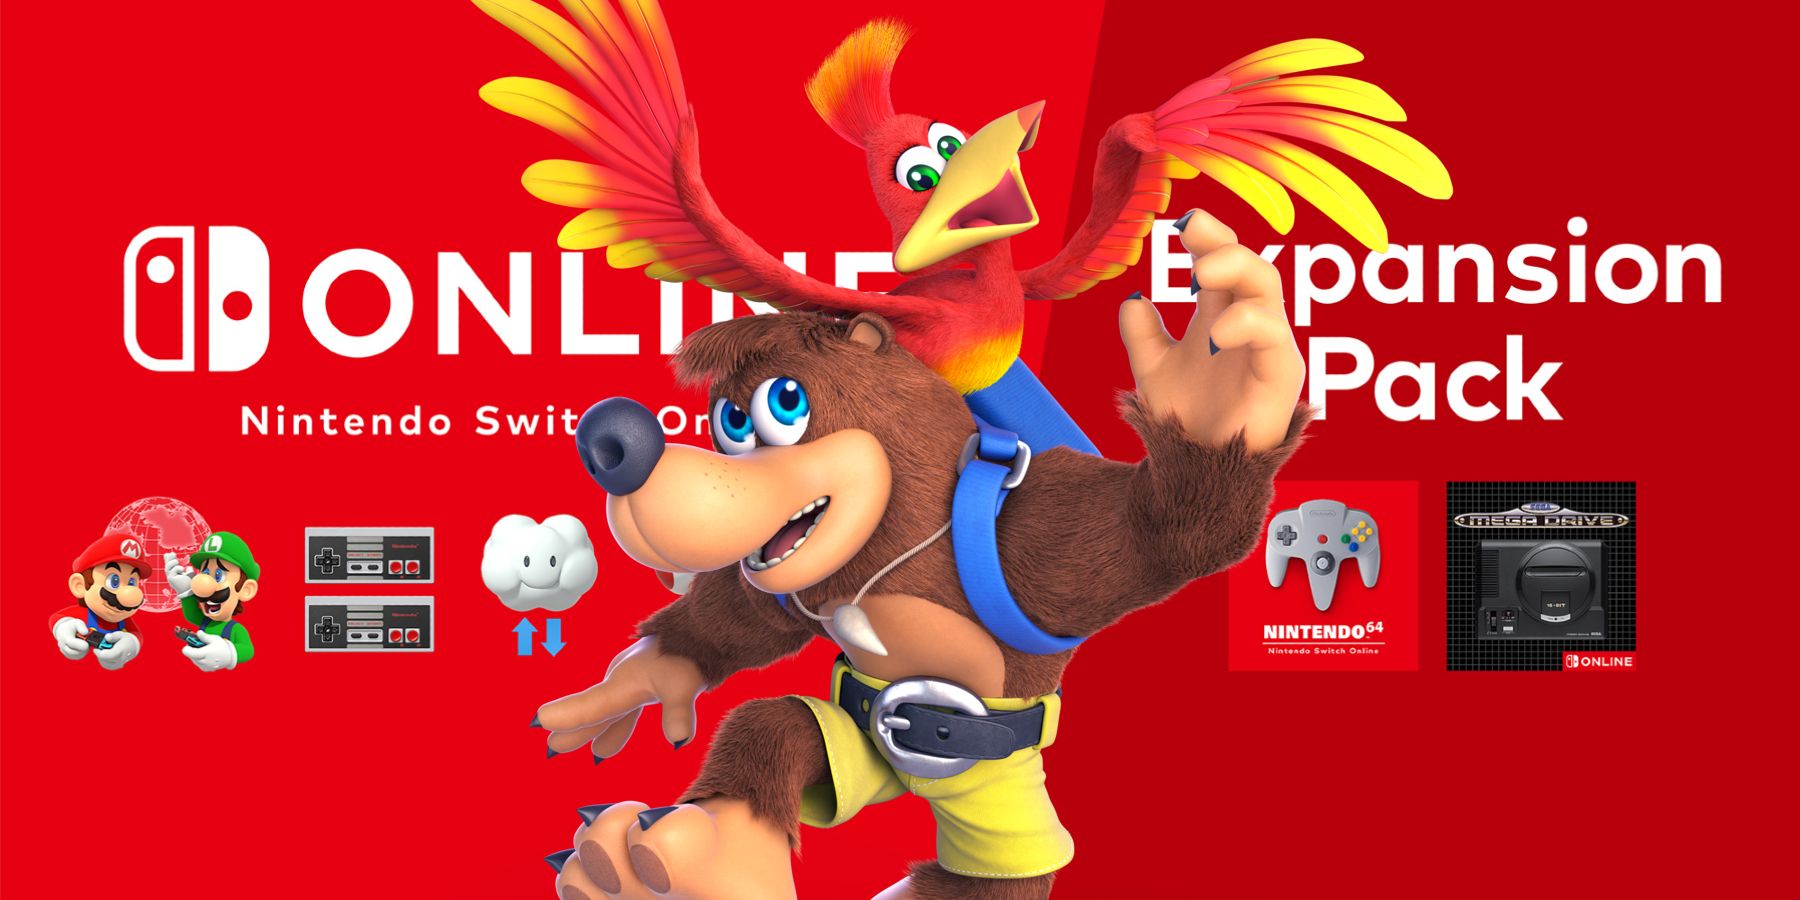 Banjo Kazooie Is Coming To Nintendo Switch Online Tomorrow